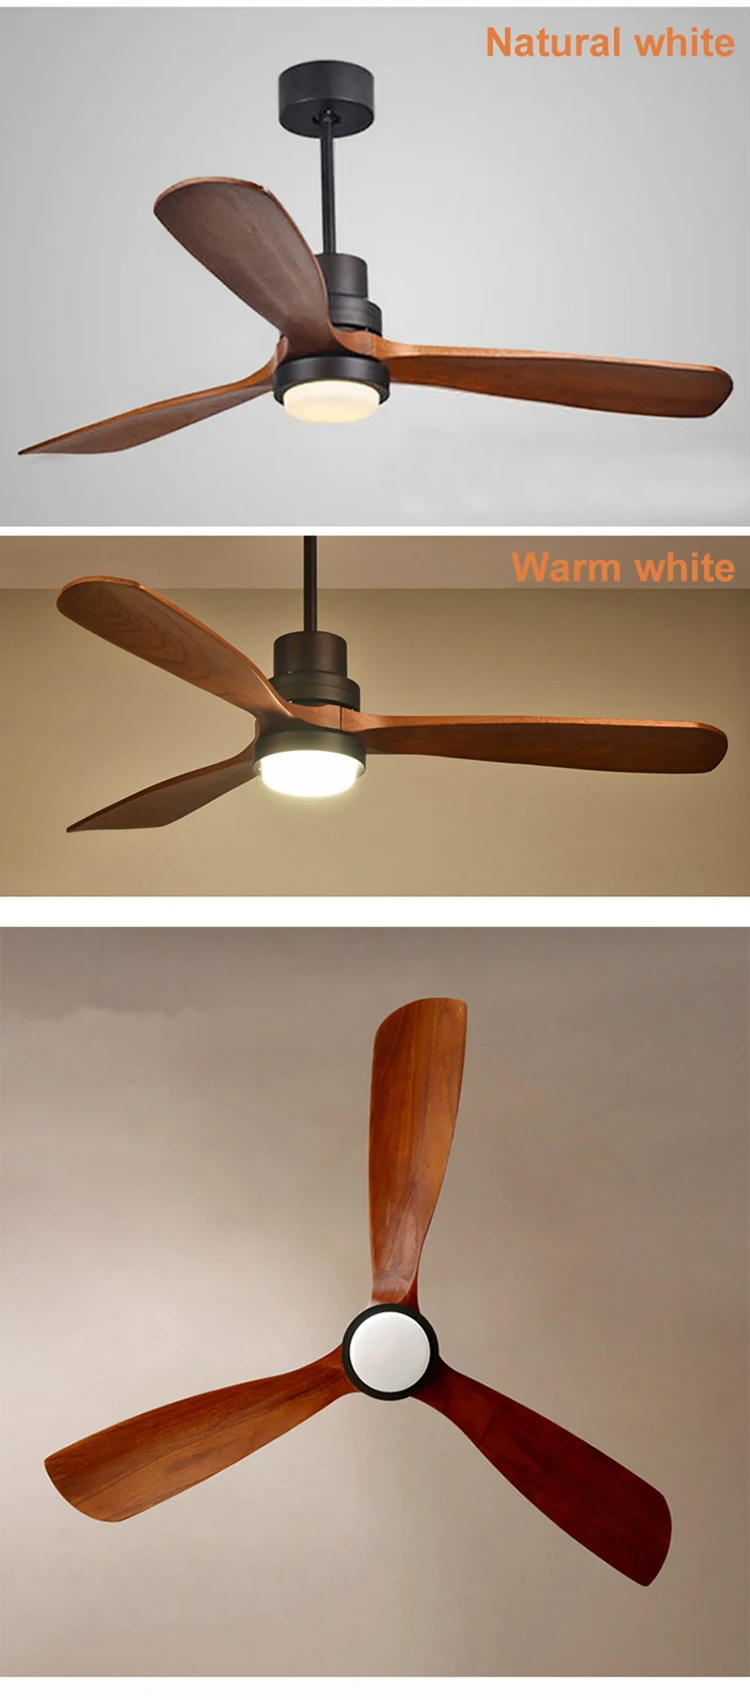 New Arrival Modern Natural Wood Color Blade Decorative LED Ceiling Fan Light